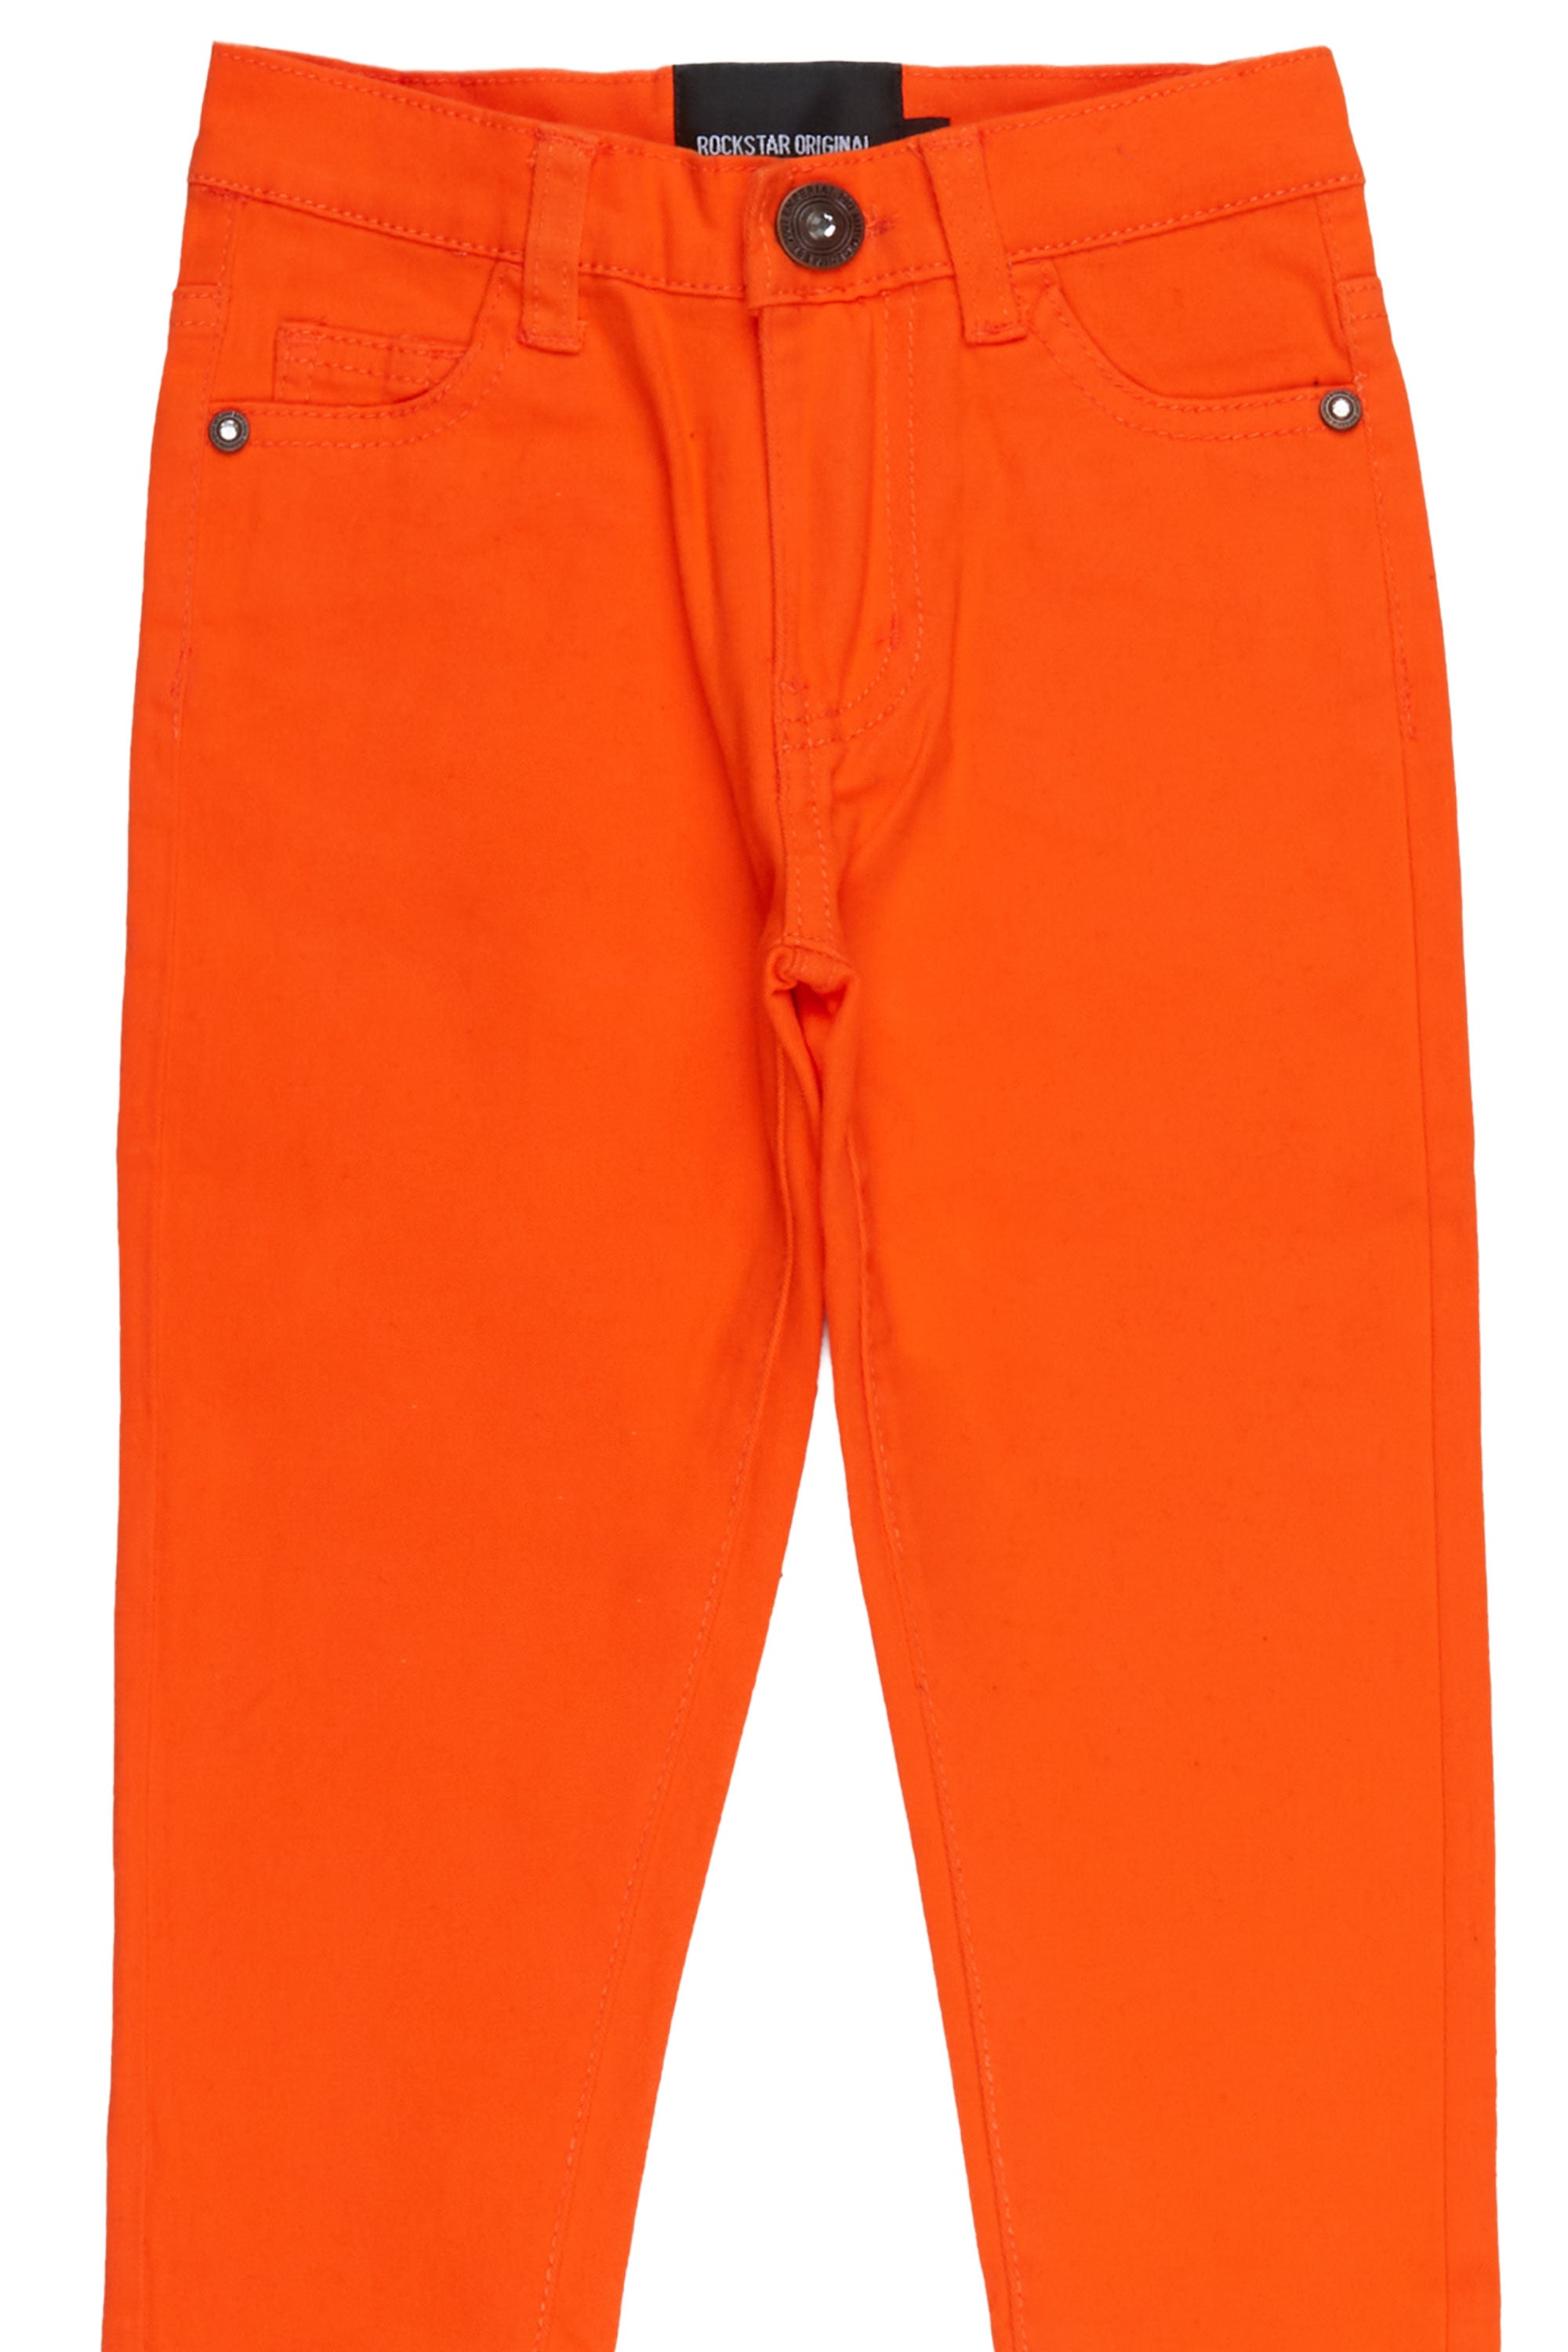 Girls Shyla Orange 5 Pocket Jean